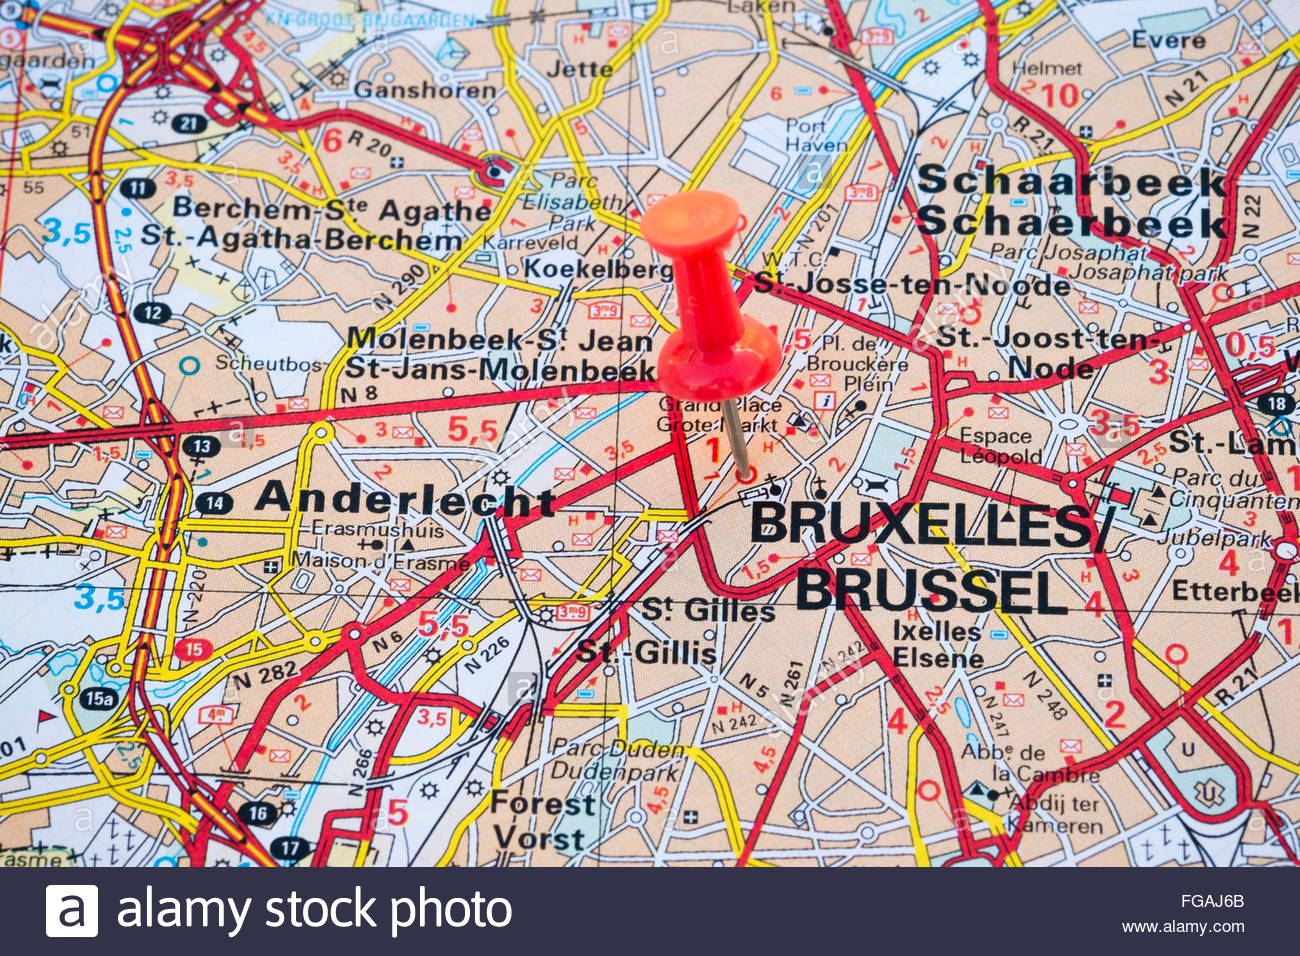 Map Of Brussels Capital City Belgium FGAJ6B 